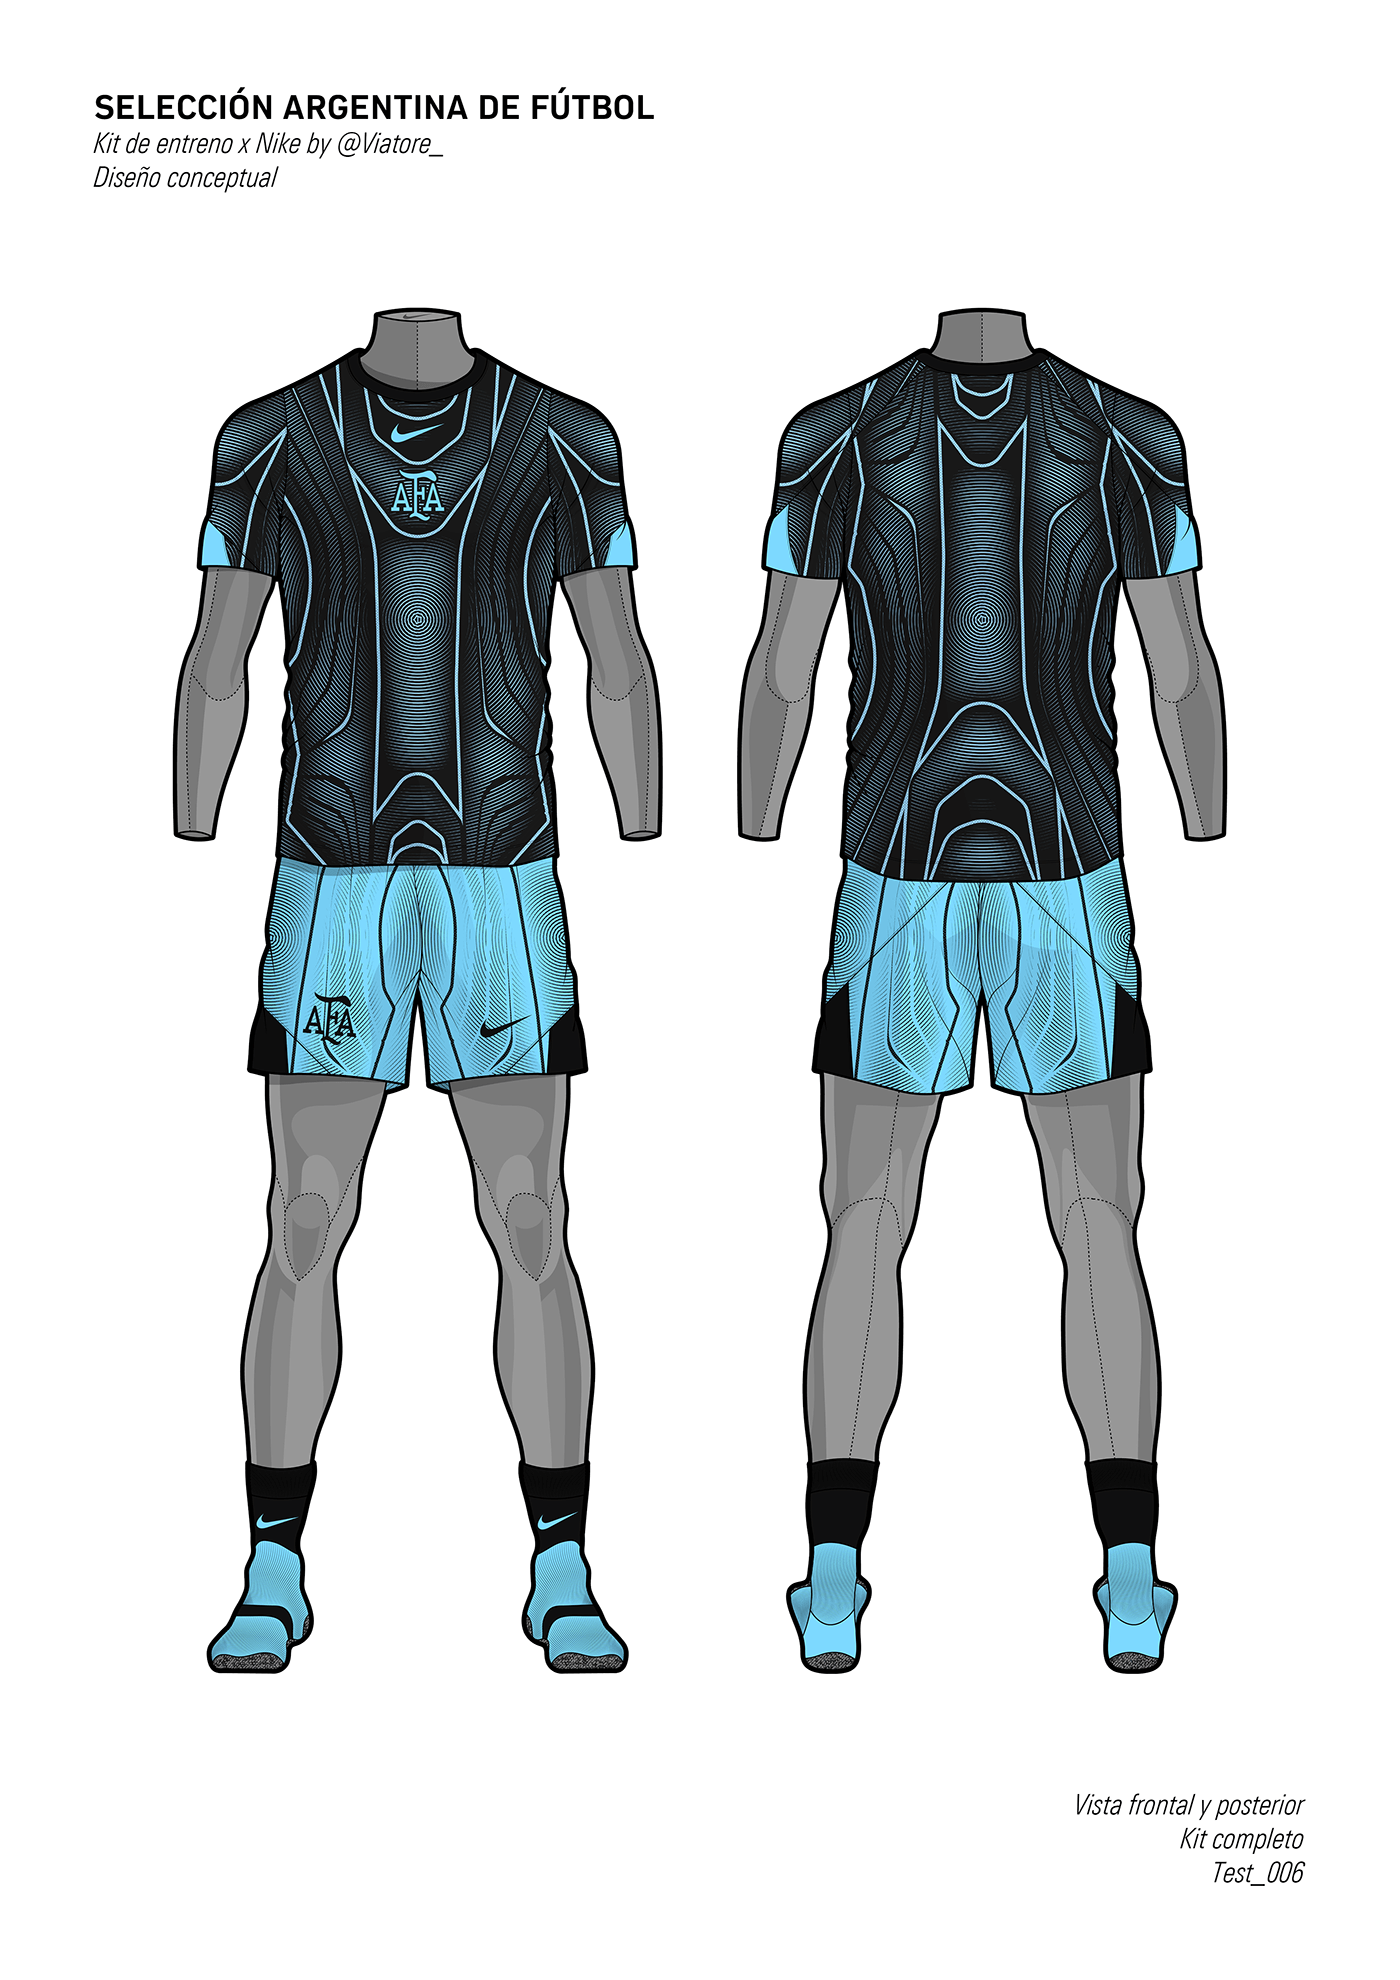 sportwear design sportwear argentina messi Nike nike football afa Futbol soccer design